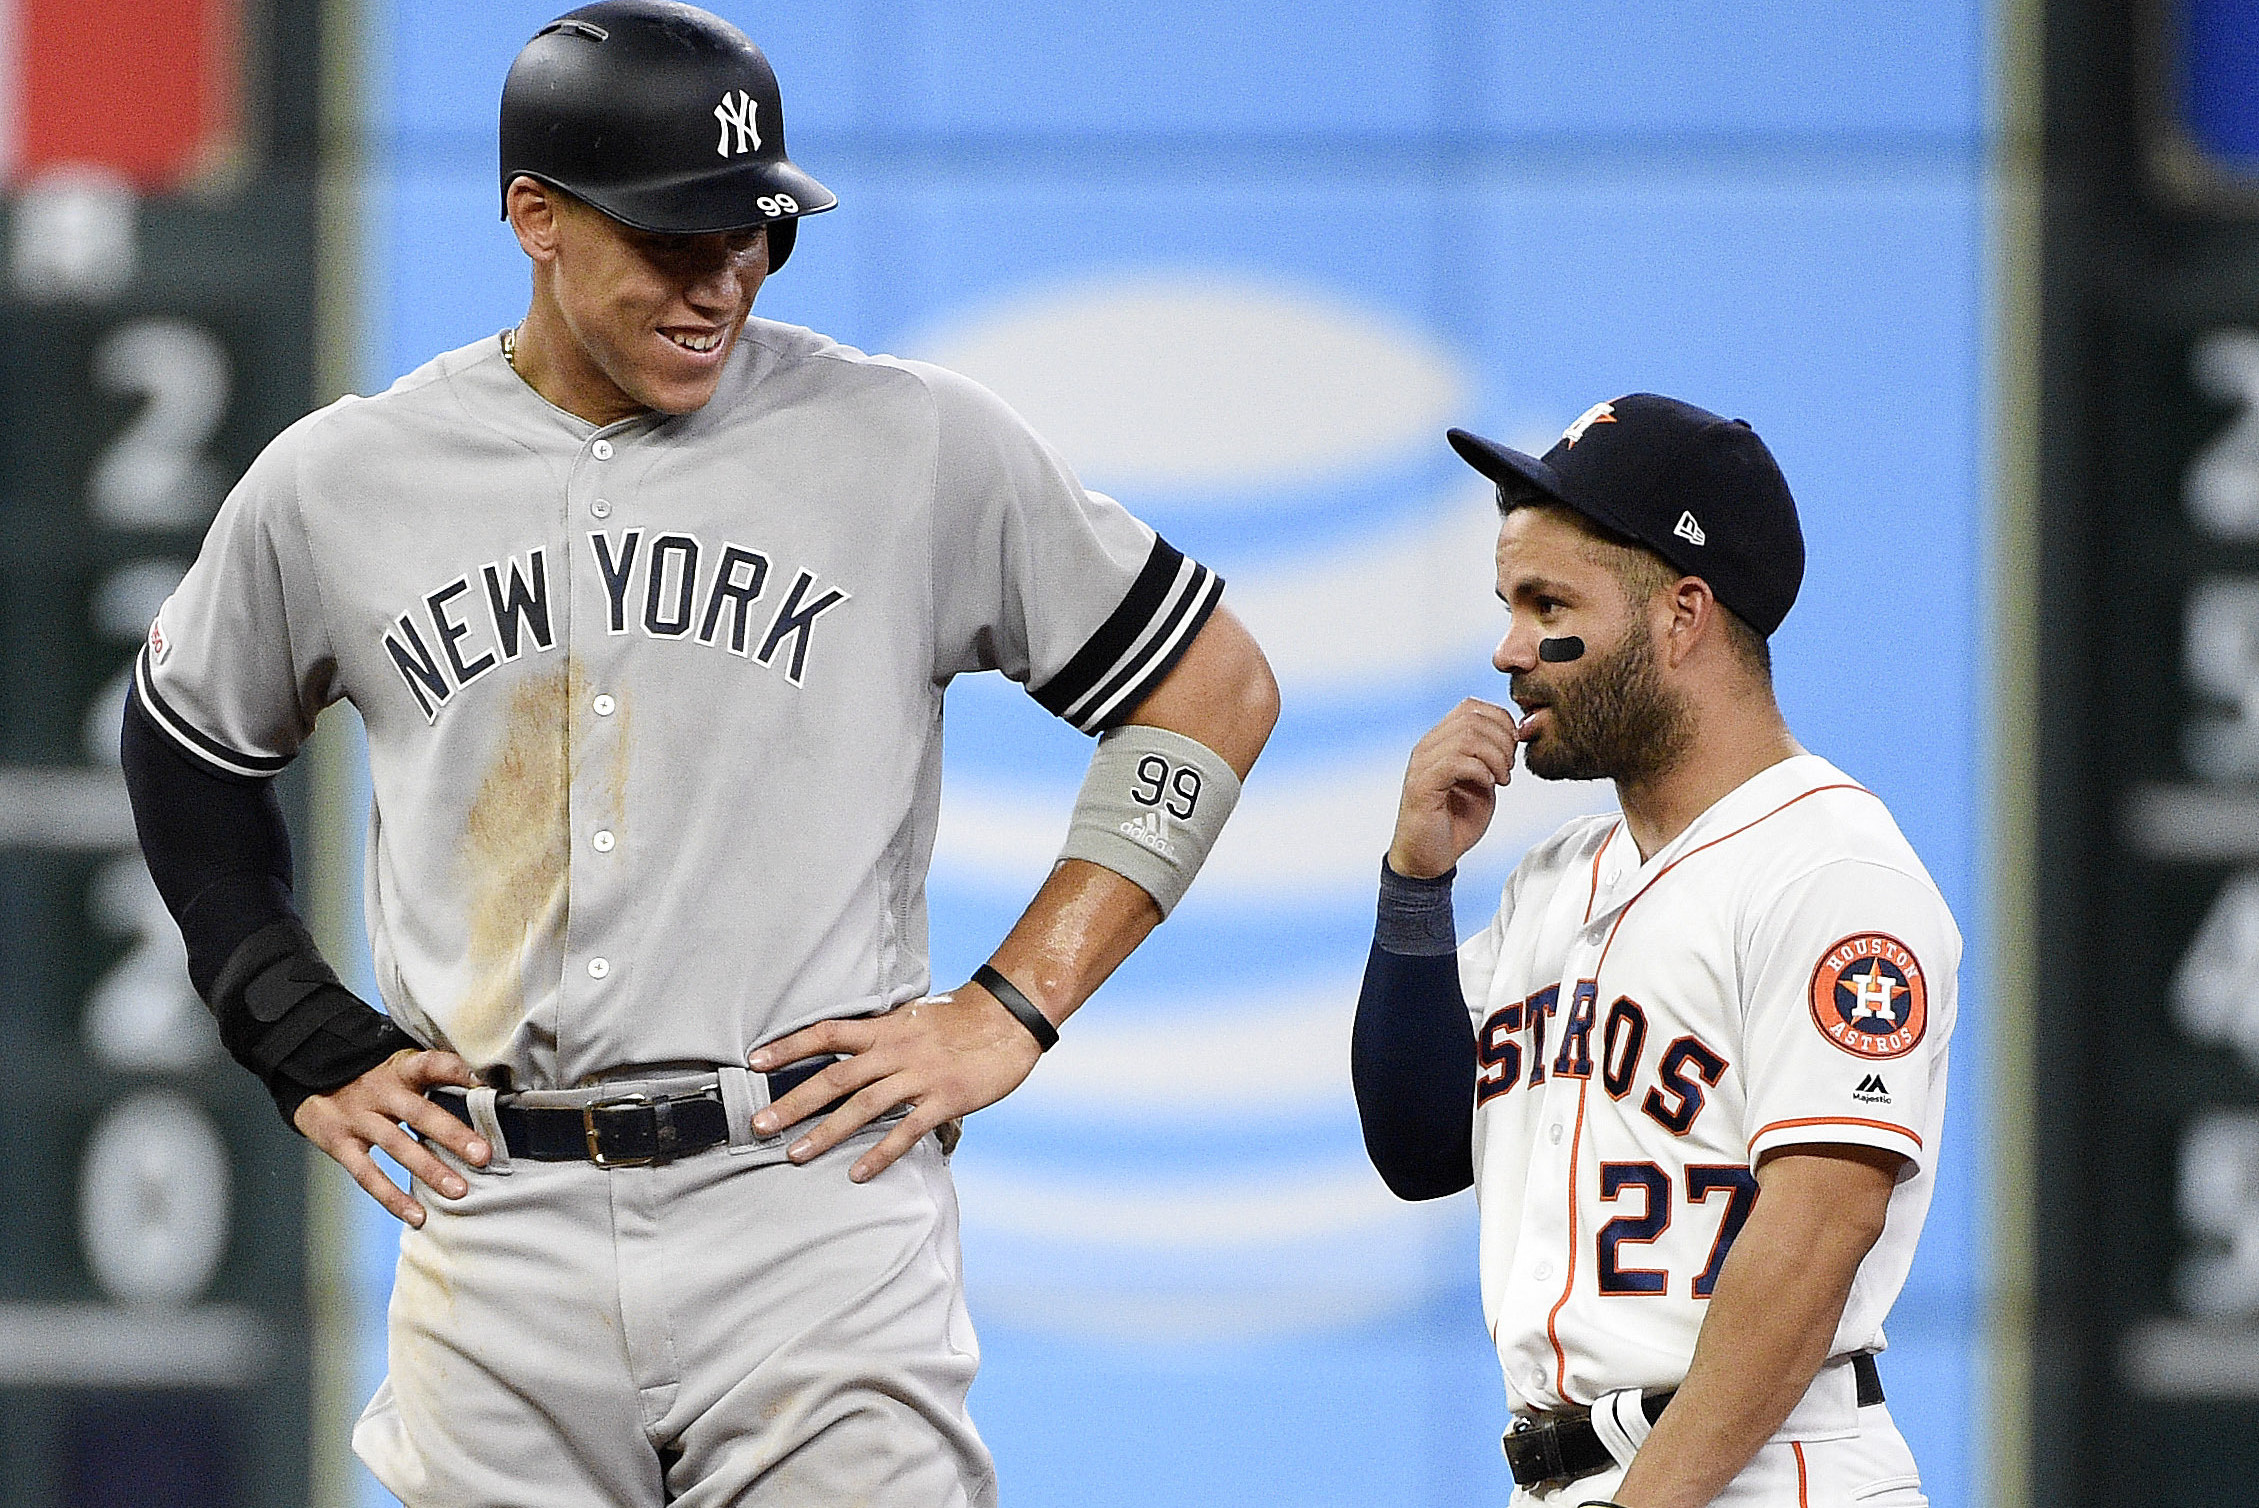 Yankees' Aaron Judge Deletes IG Congratulating Astros' Jose Altuve